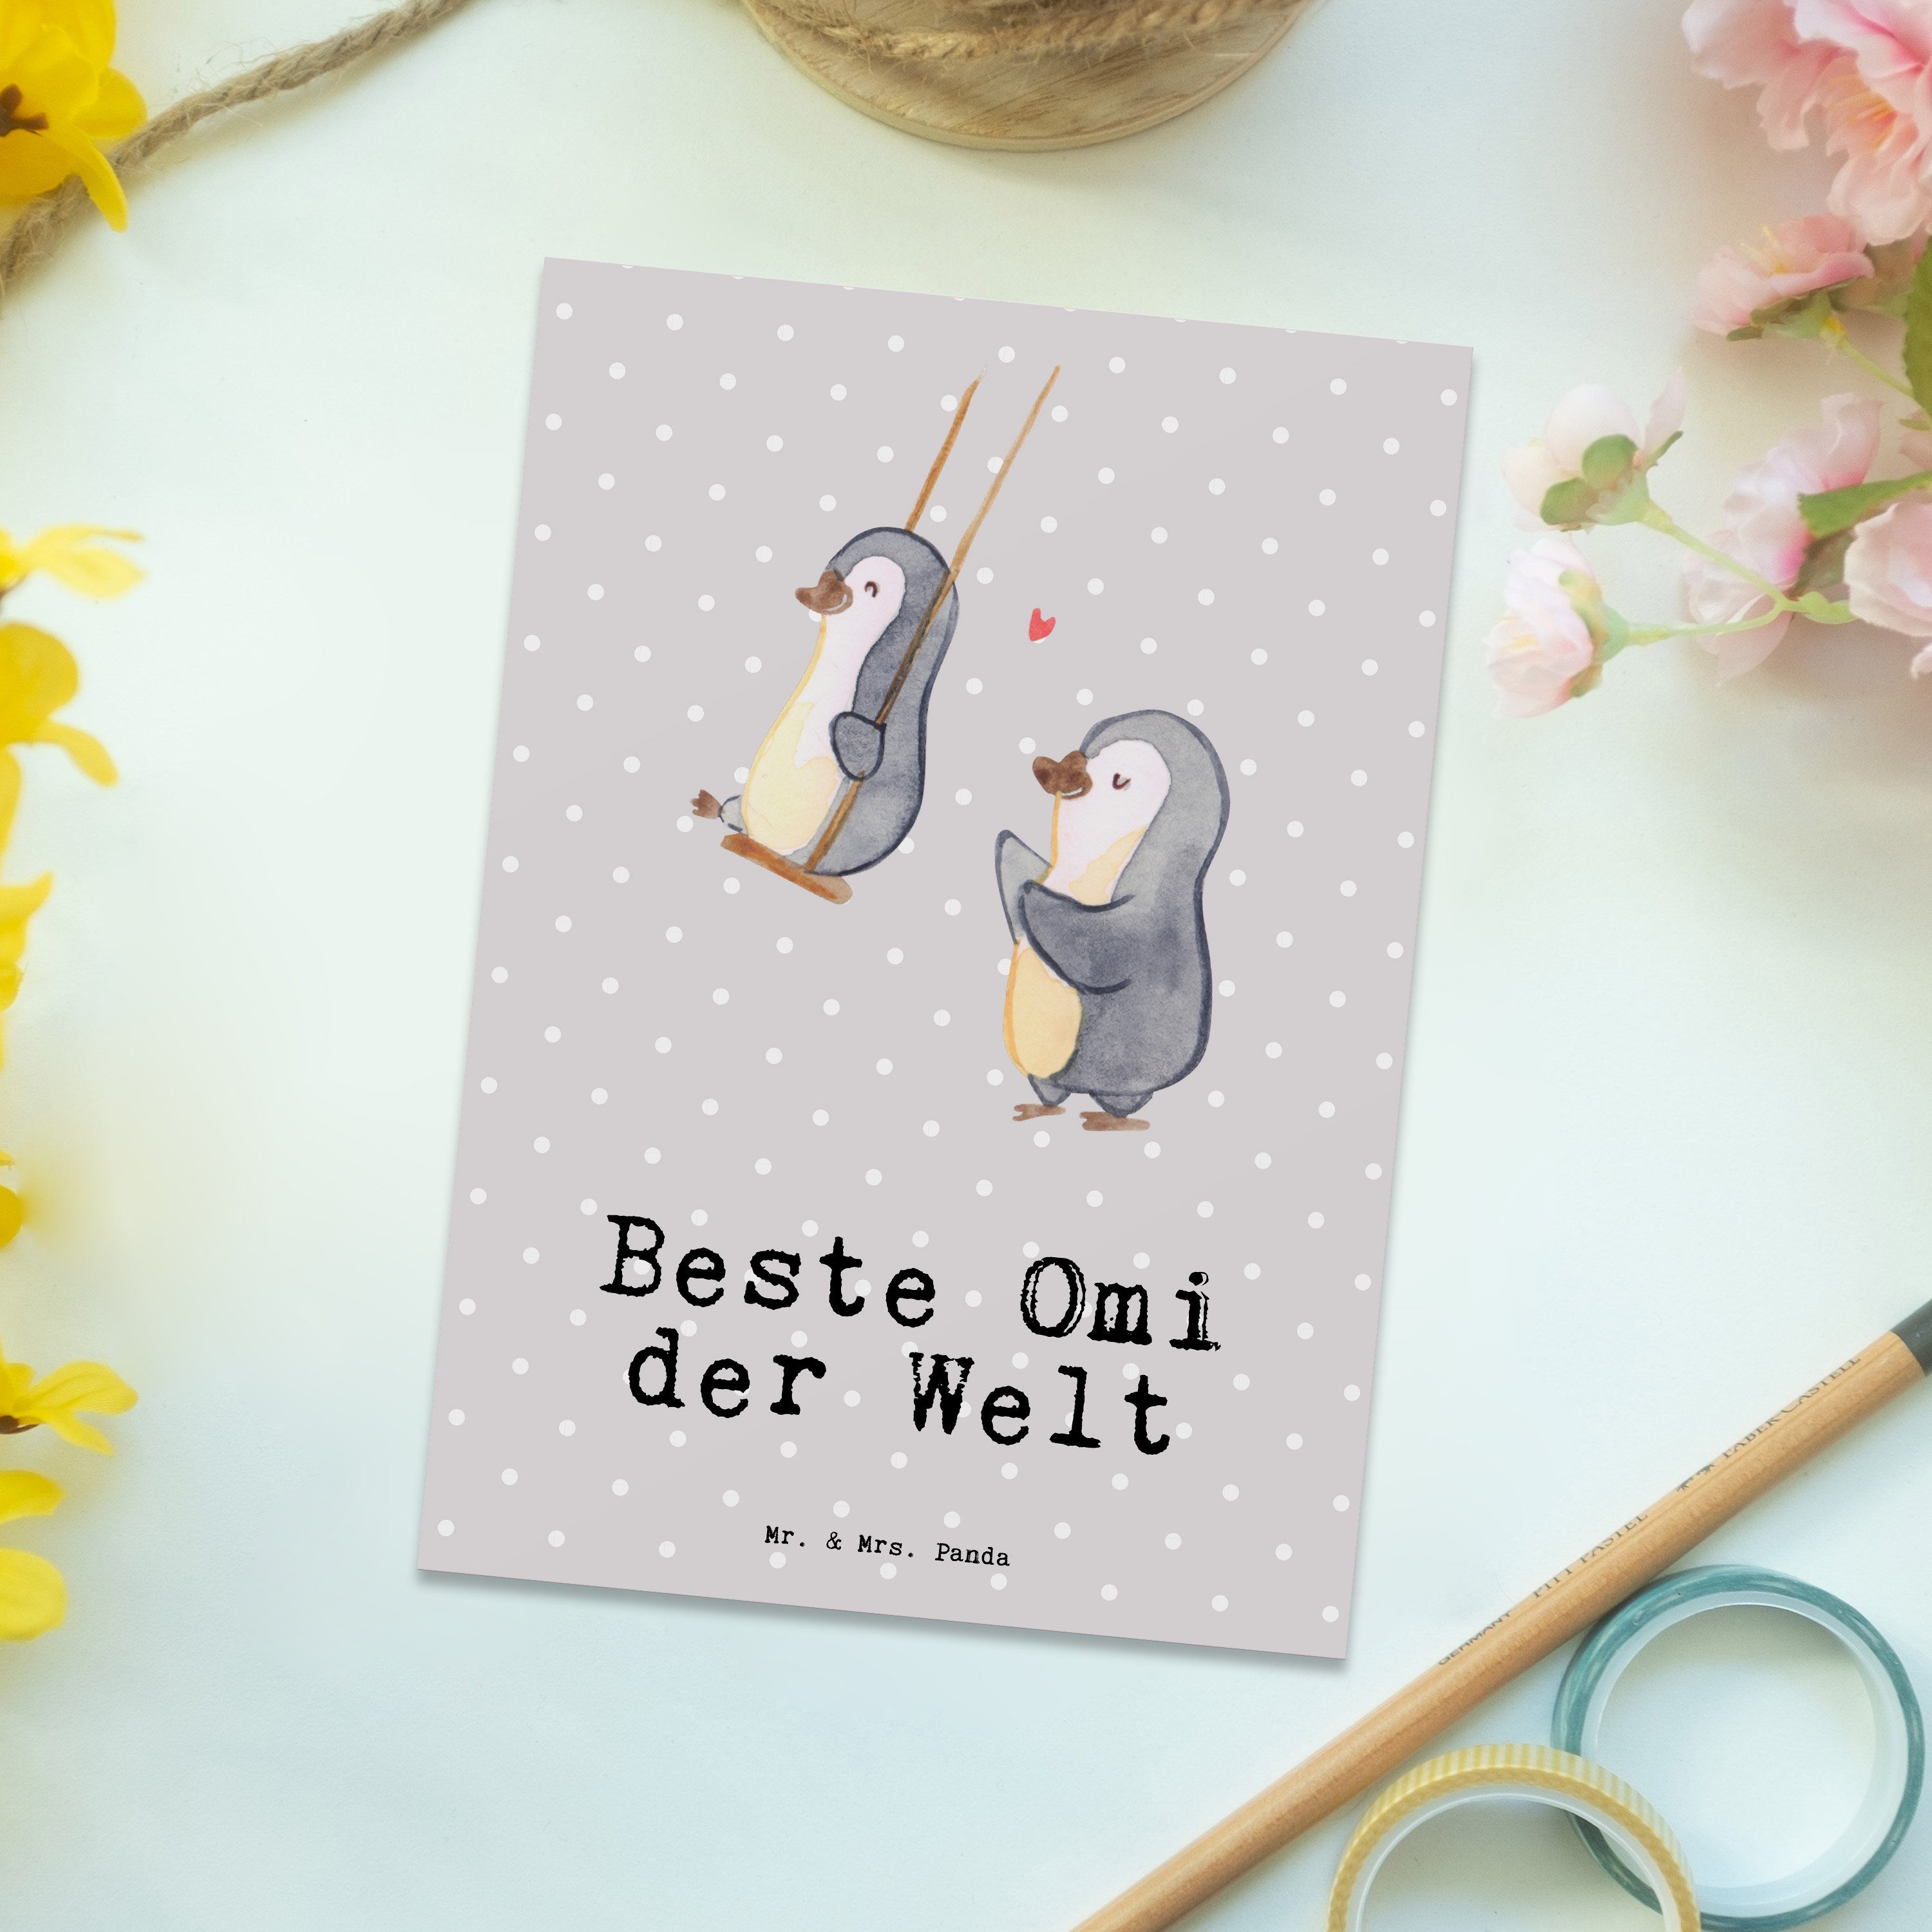 Mr. & Mrs. Panda Grau Welt der Dank Pastell Omi Geschenk, Beste - - Pinguin Grußkarte, Postkarte